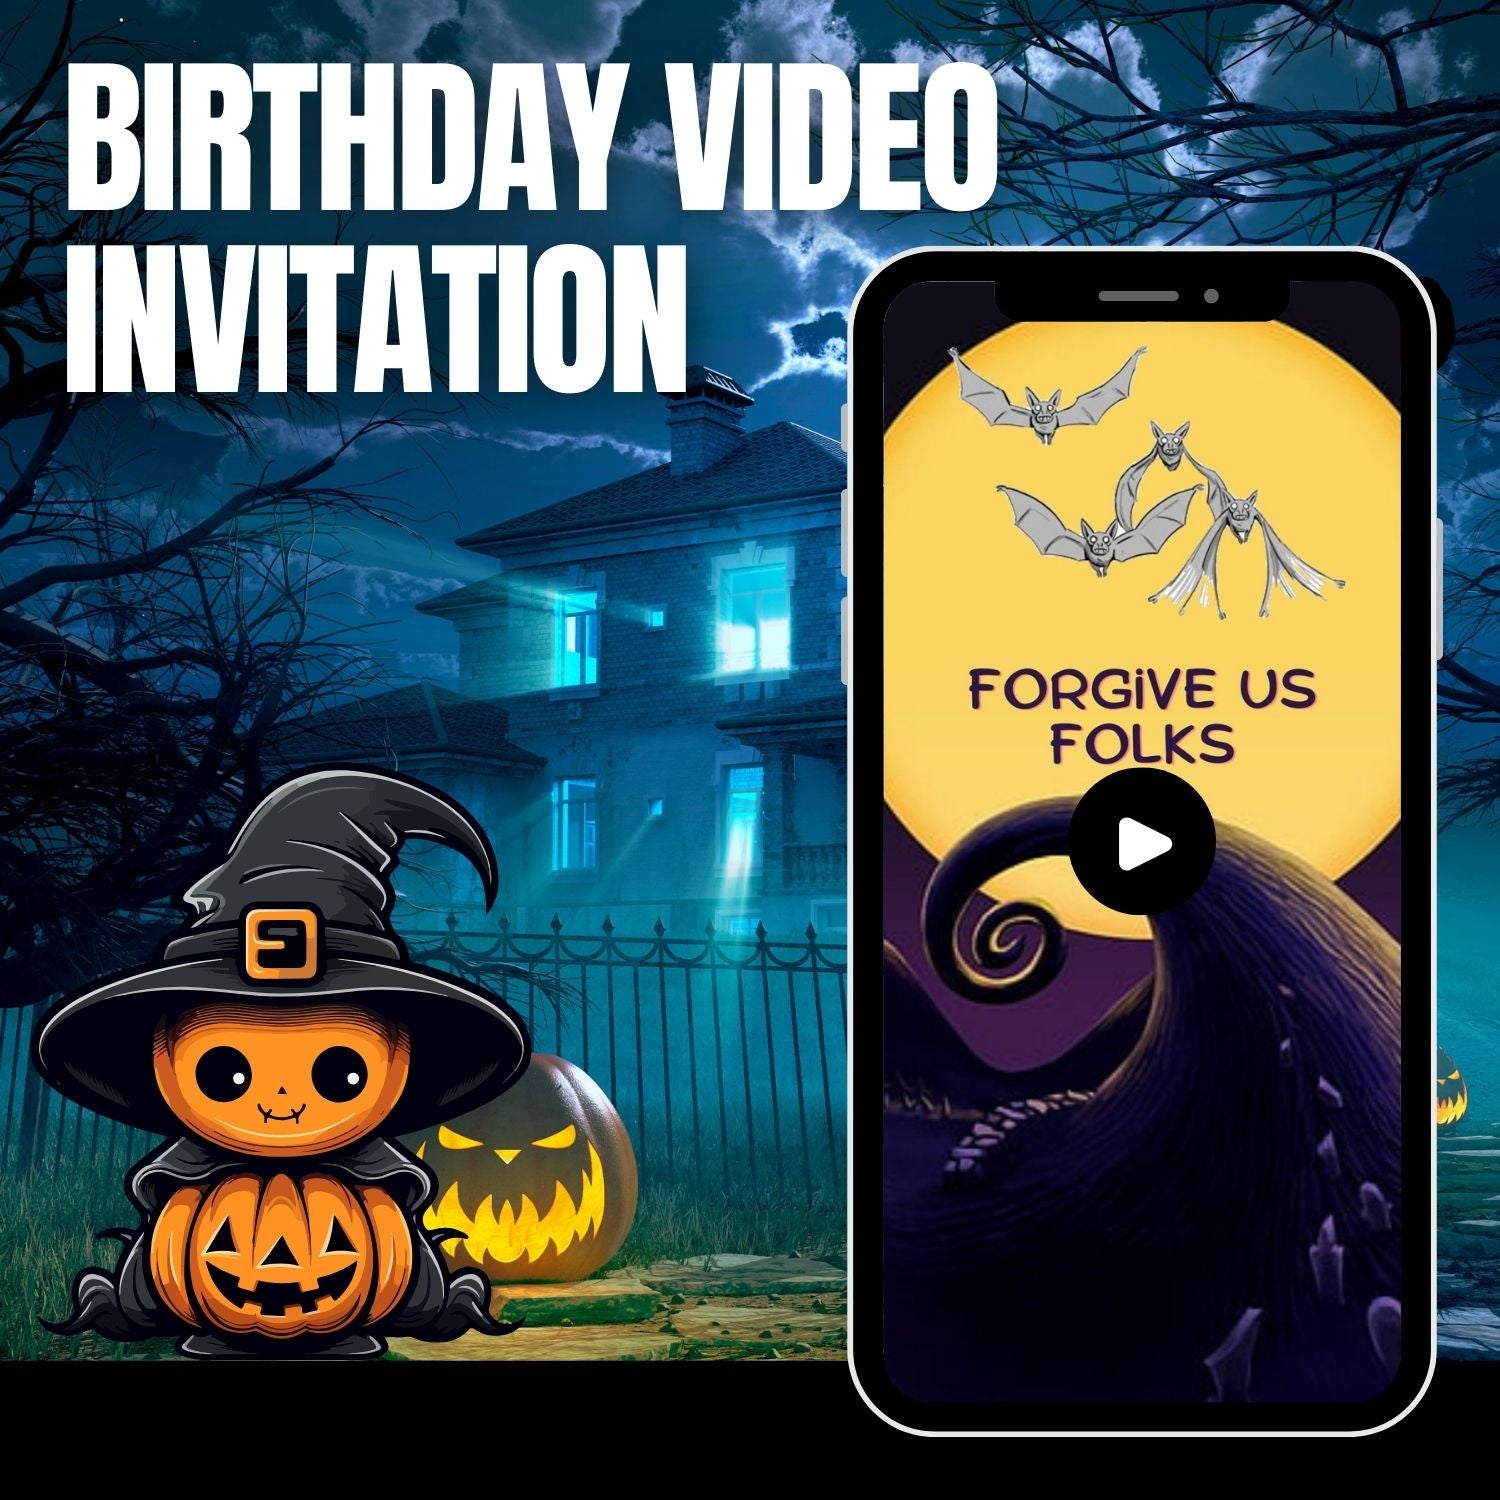 Spooky & Fun Nightmare Before Christmas Birthday Video Invitation